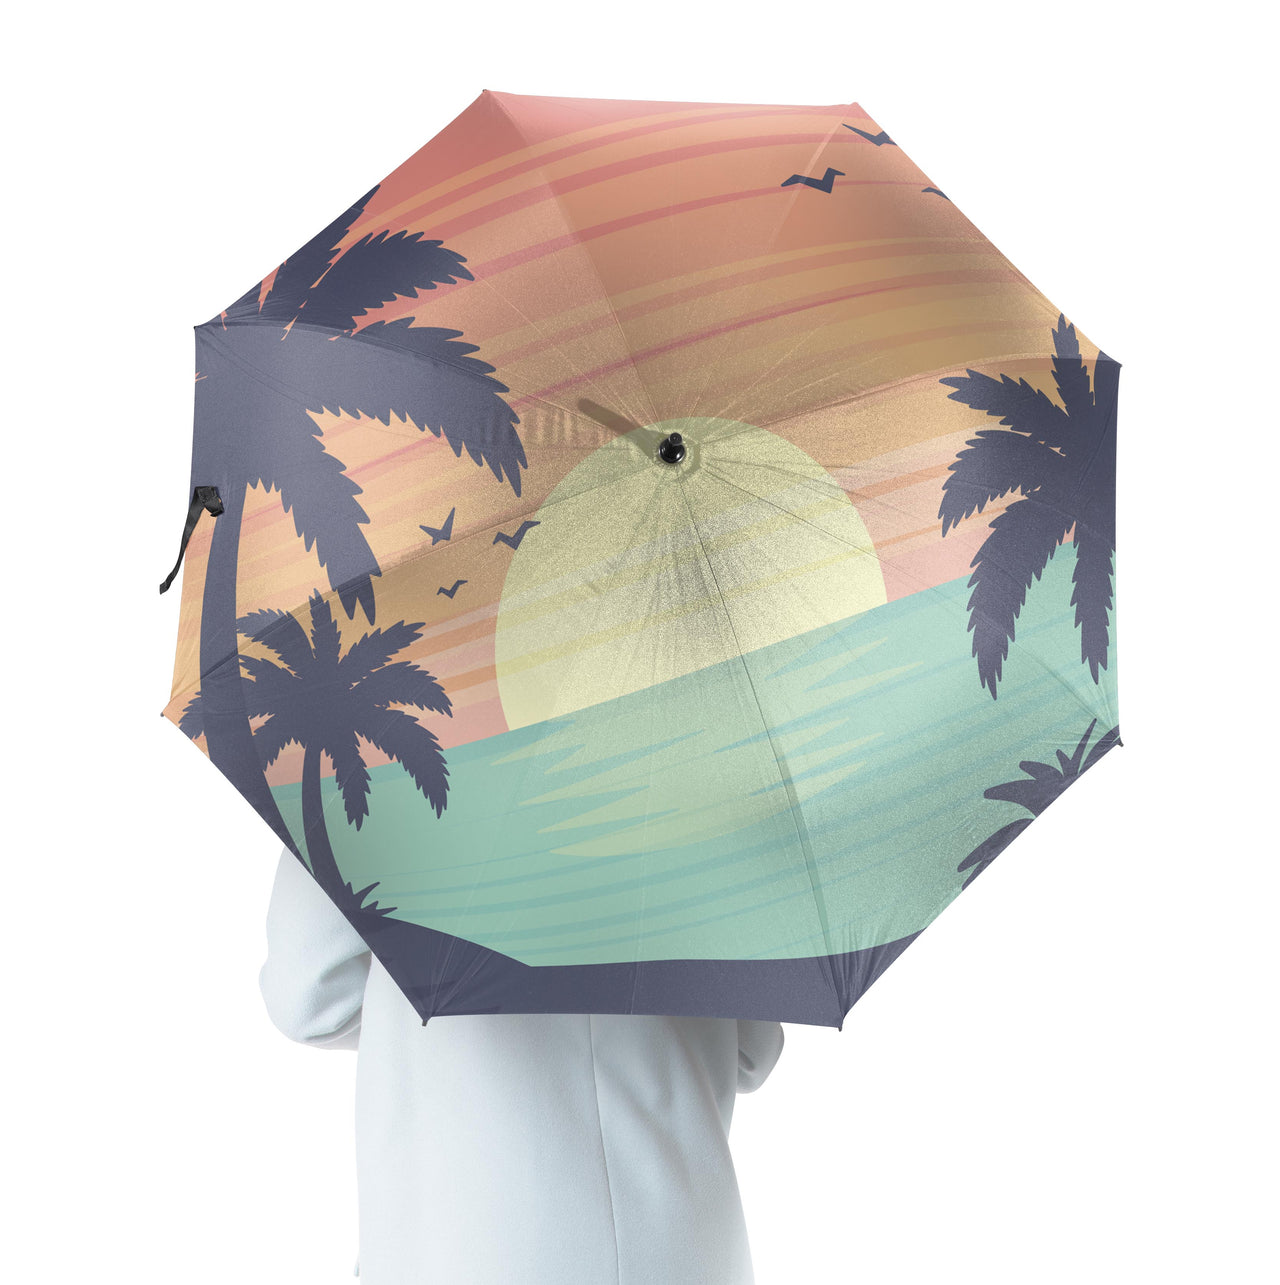 Tropical Summer Theme Designed Umbrella